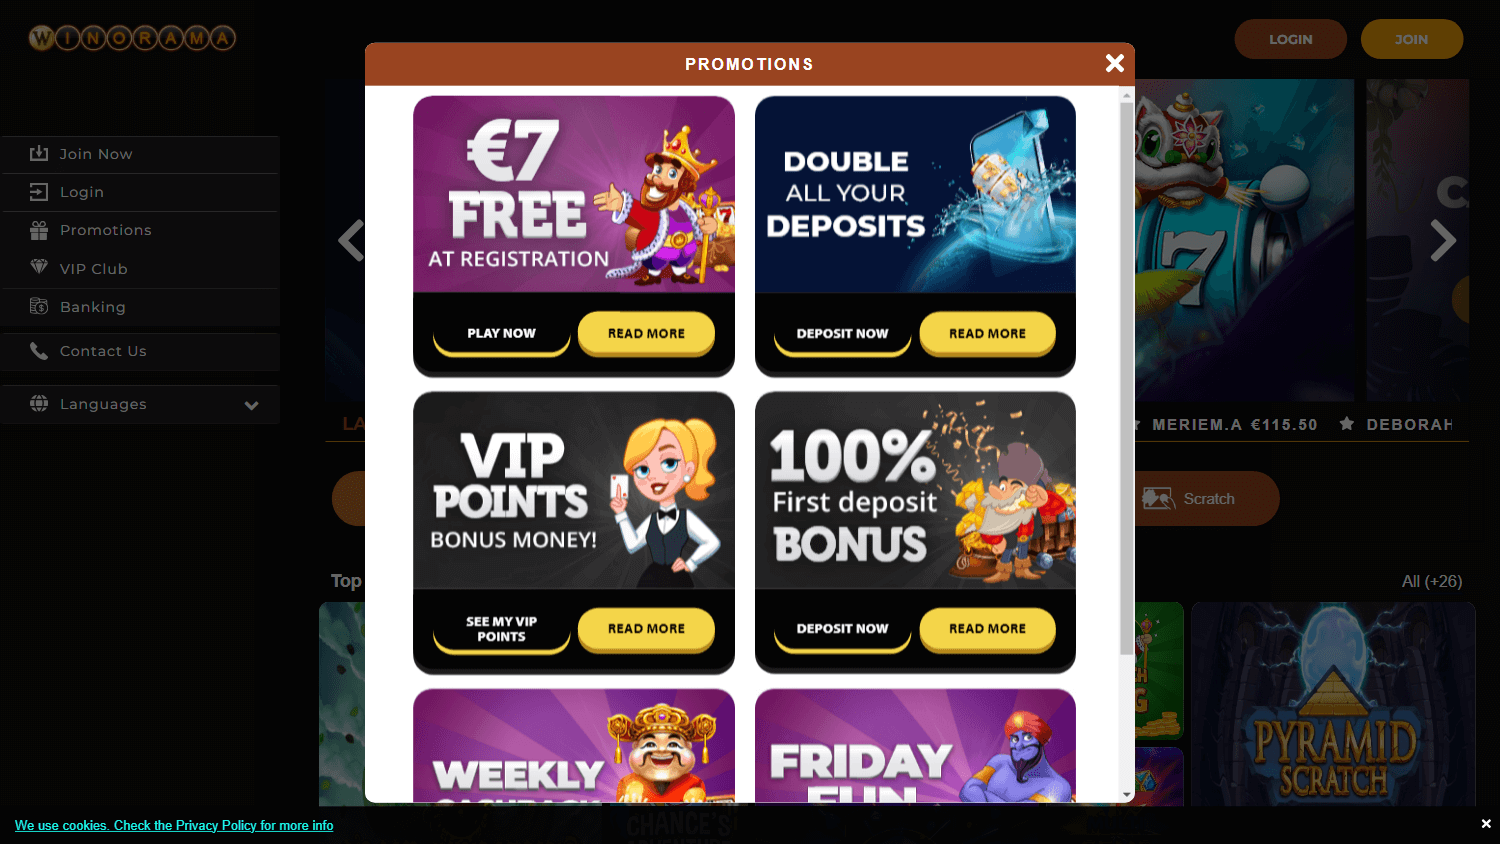 winorama_casino_promotions_desktop